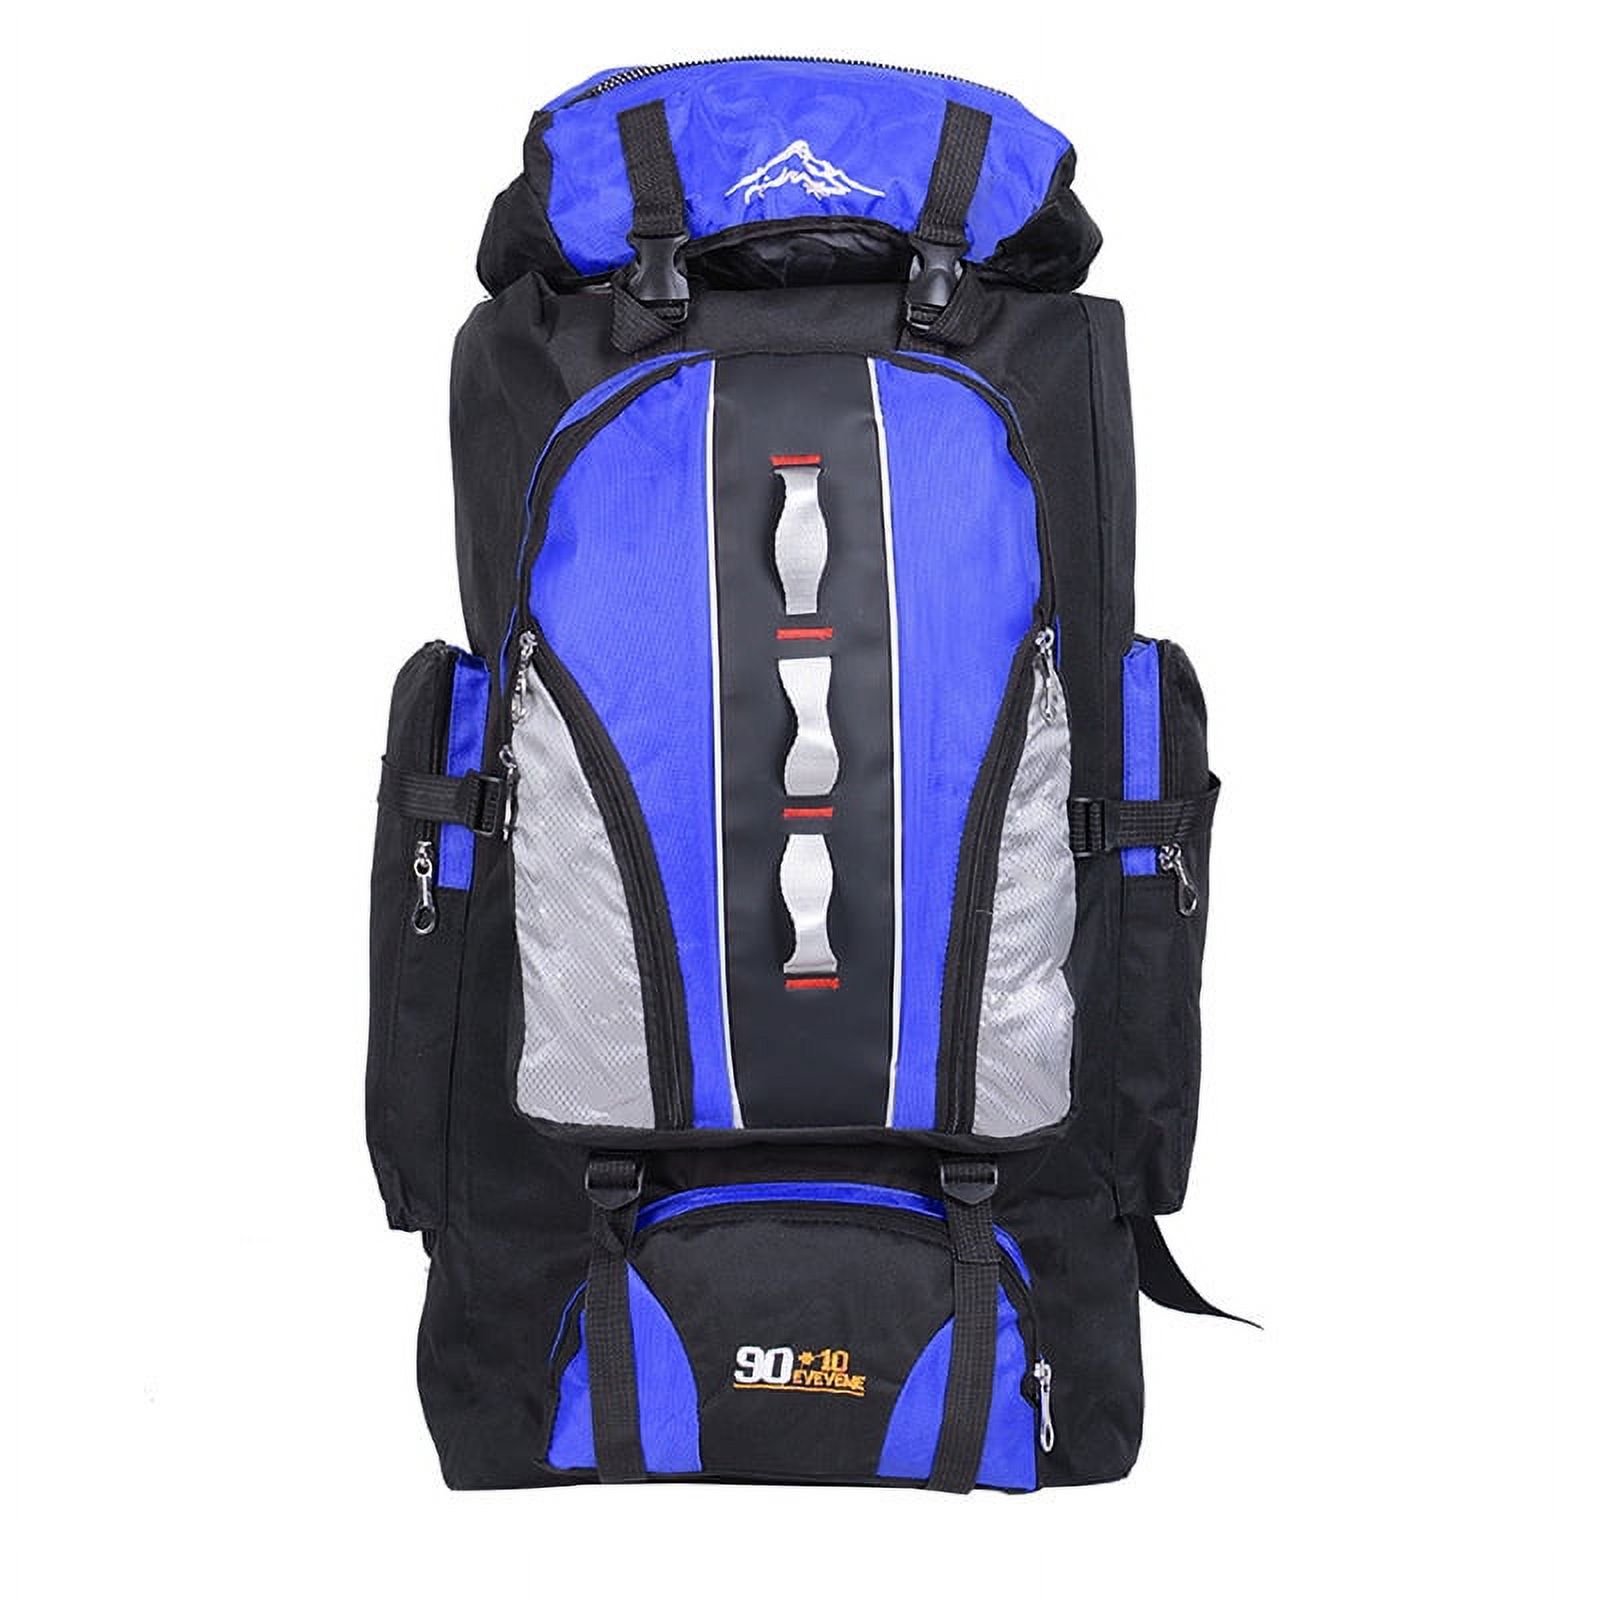 Toyella Waterproof Nylon Outdoor Hiking Bag Black 100L - image 5 of 6